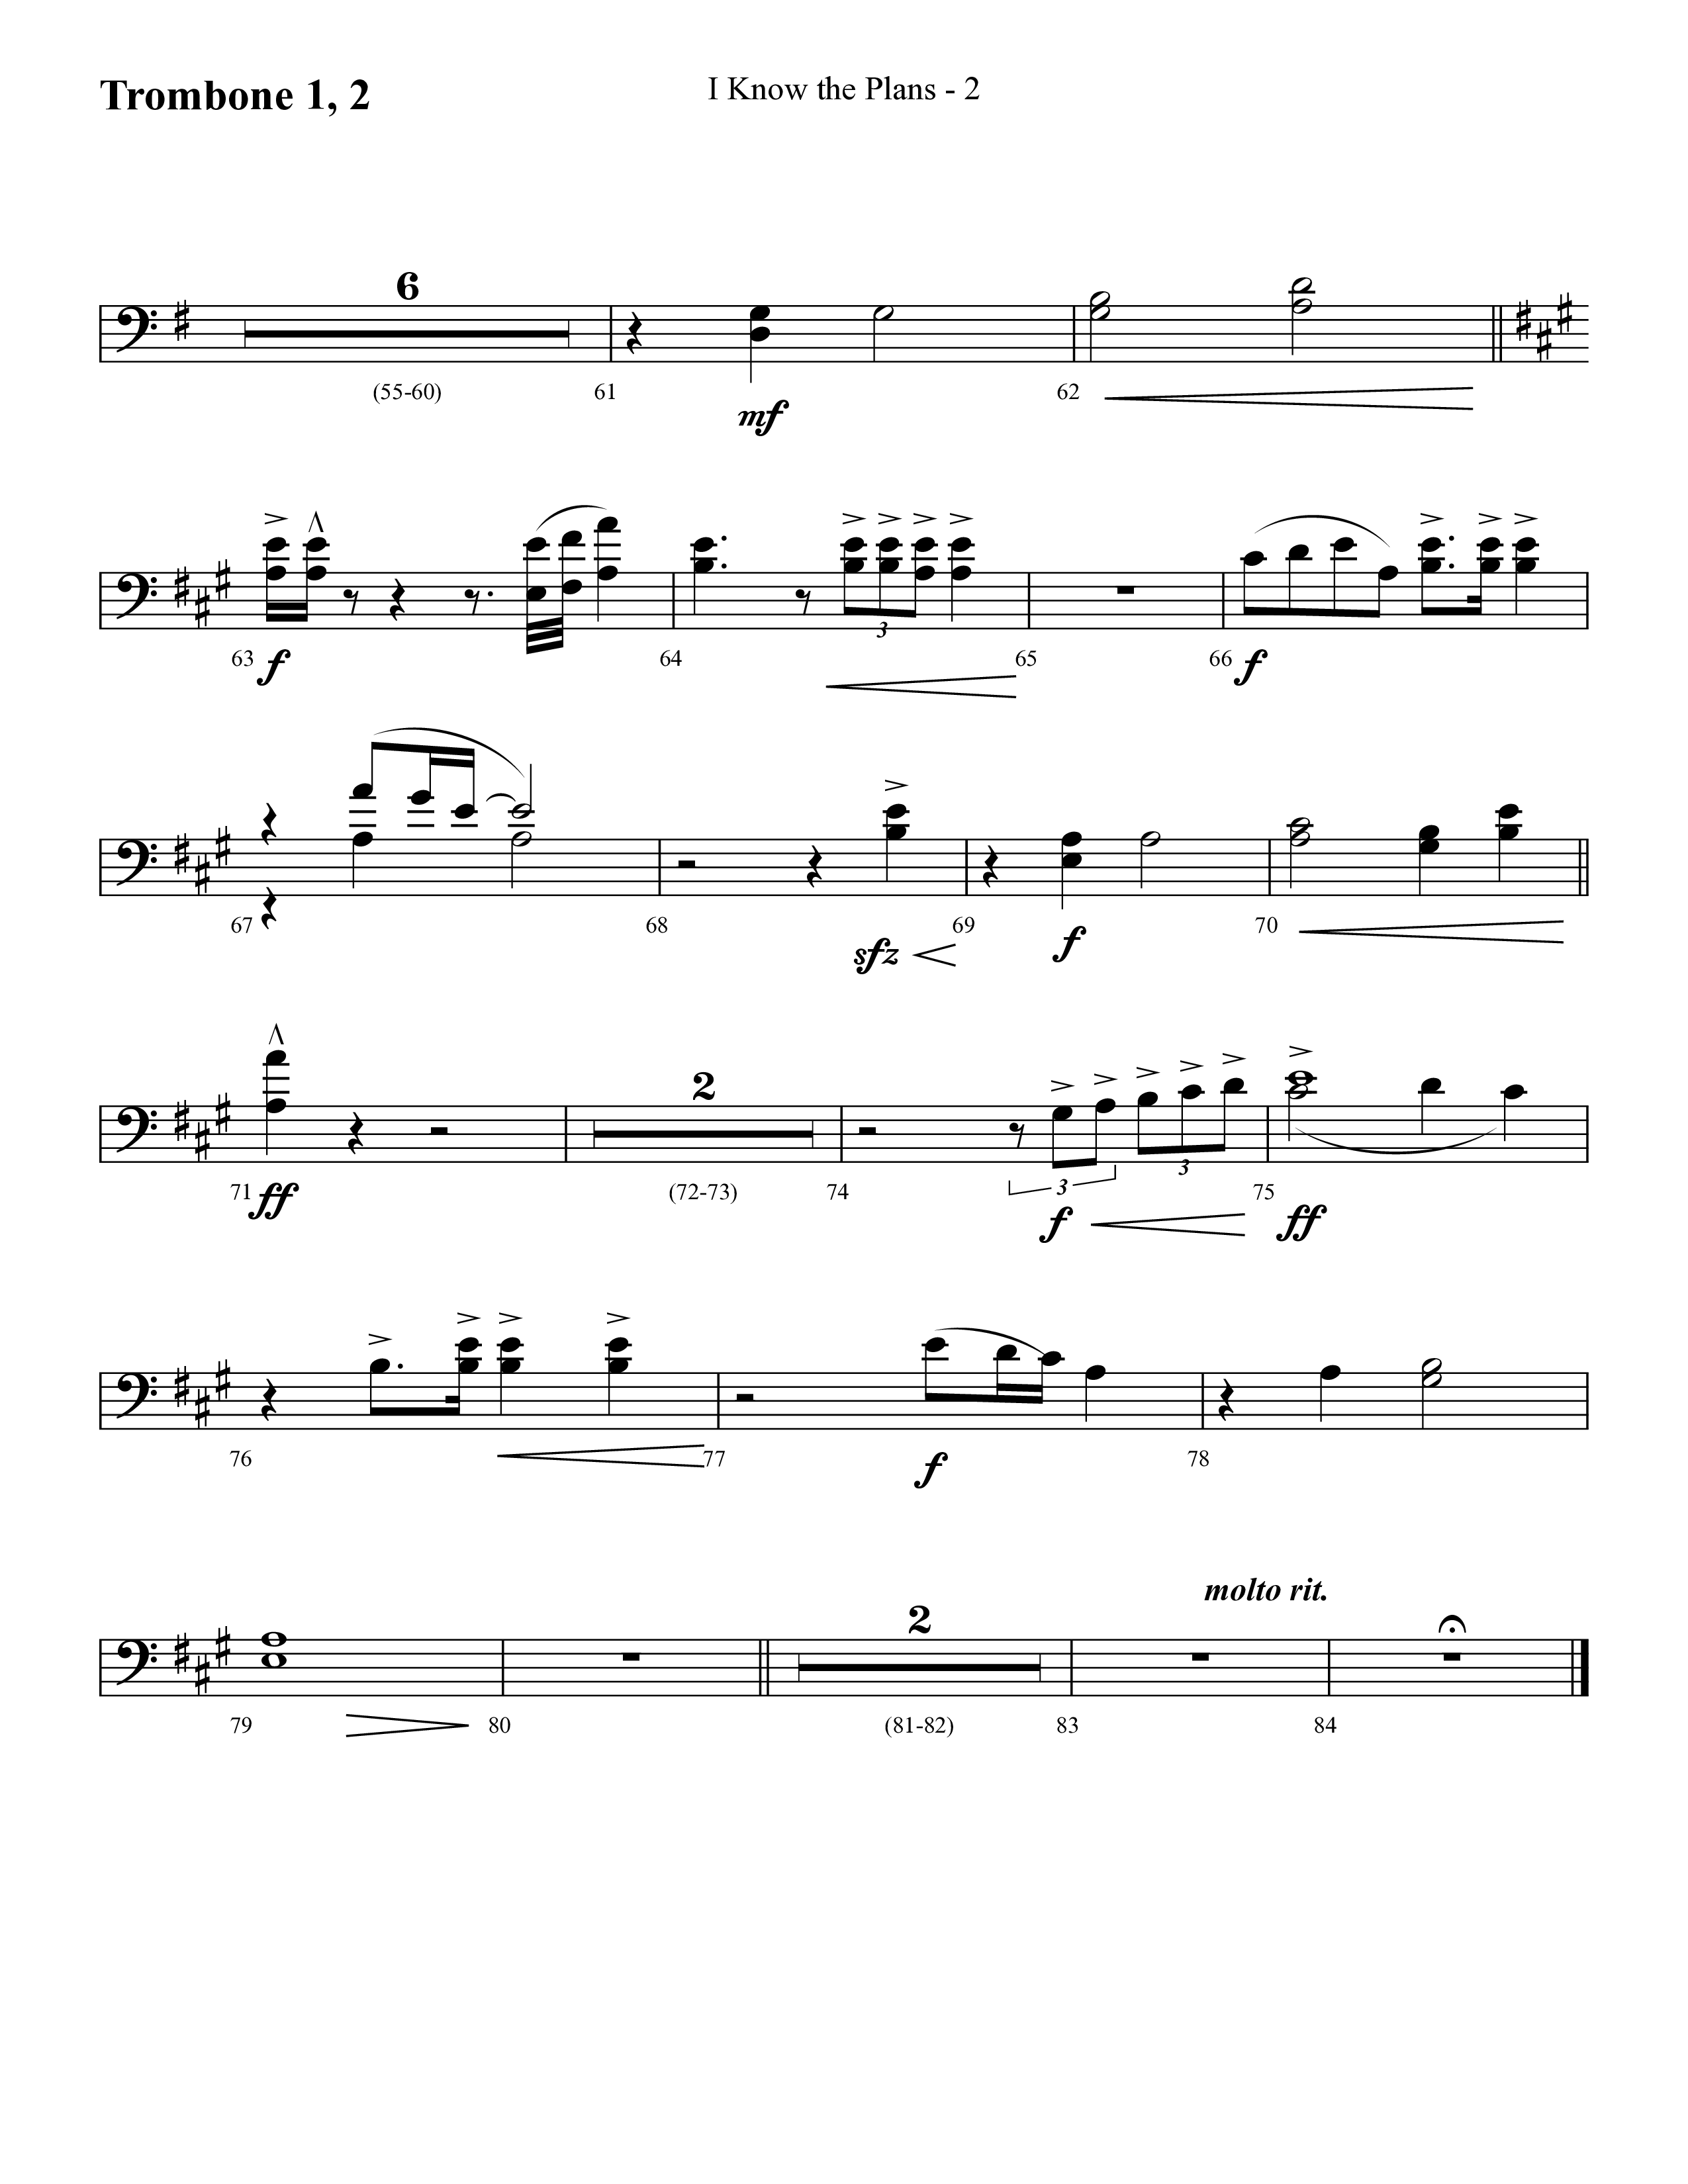 I Know The Plans (Choral Anthem SATB) Trombone 1/2 (Lifeway Choral / Arr. Cliff Duren)